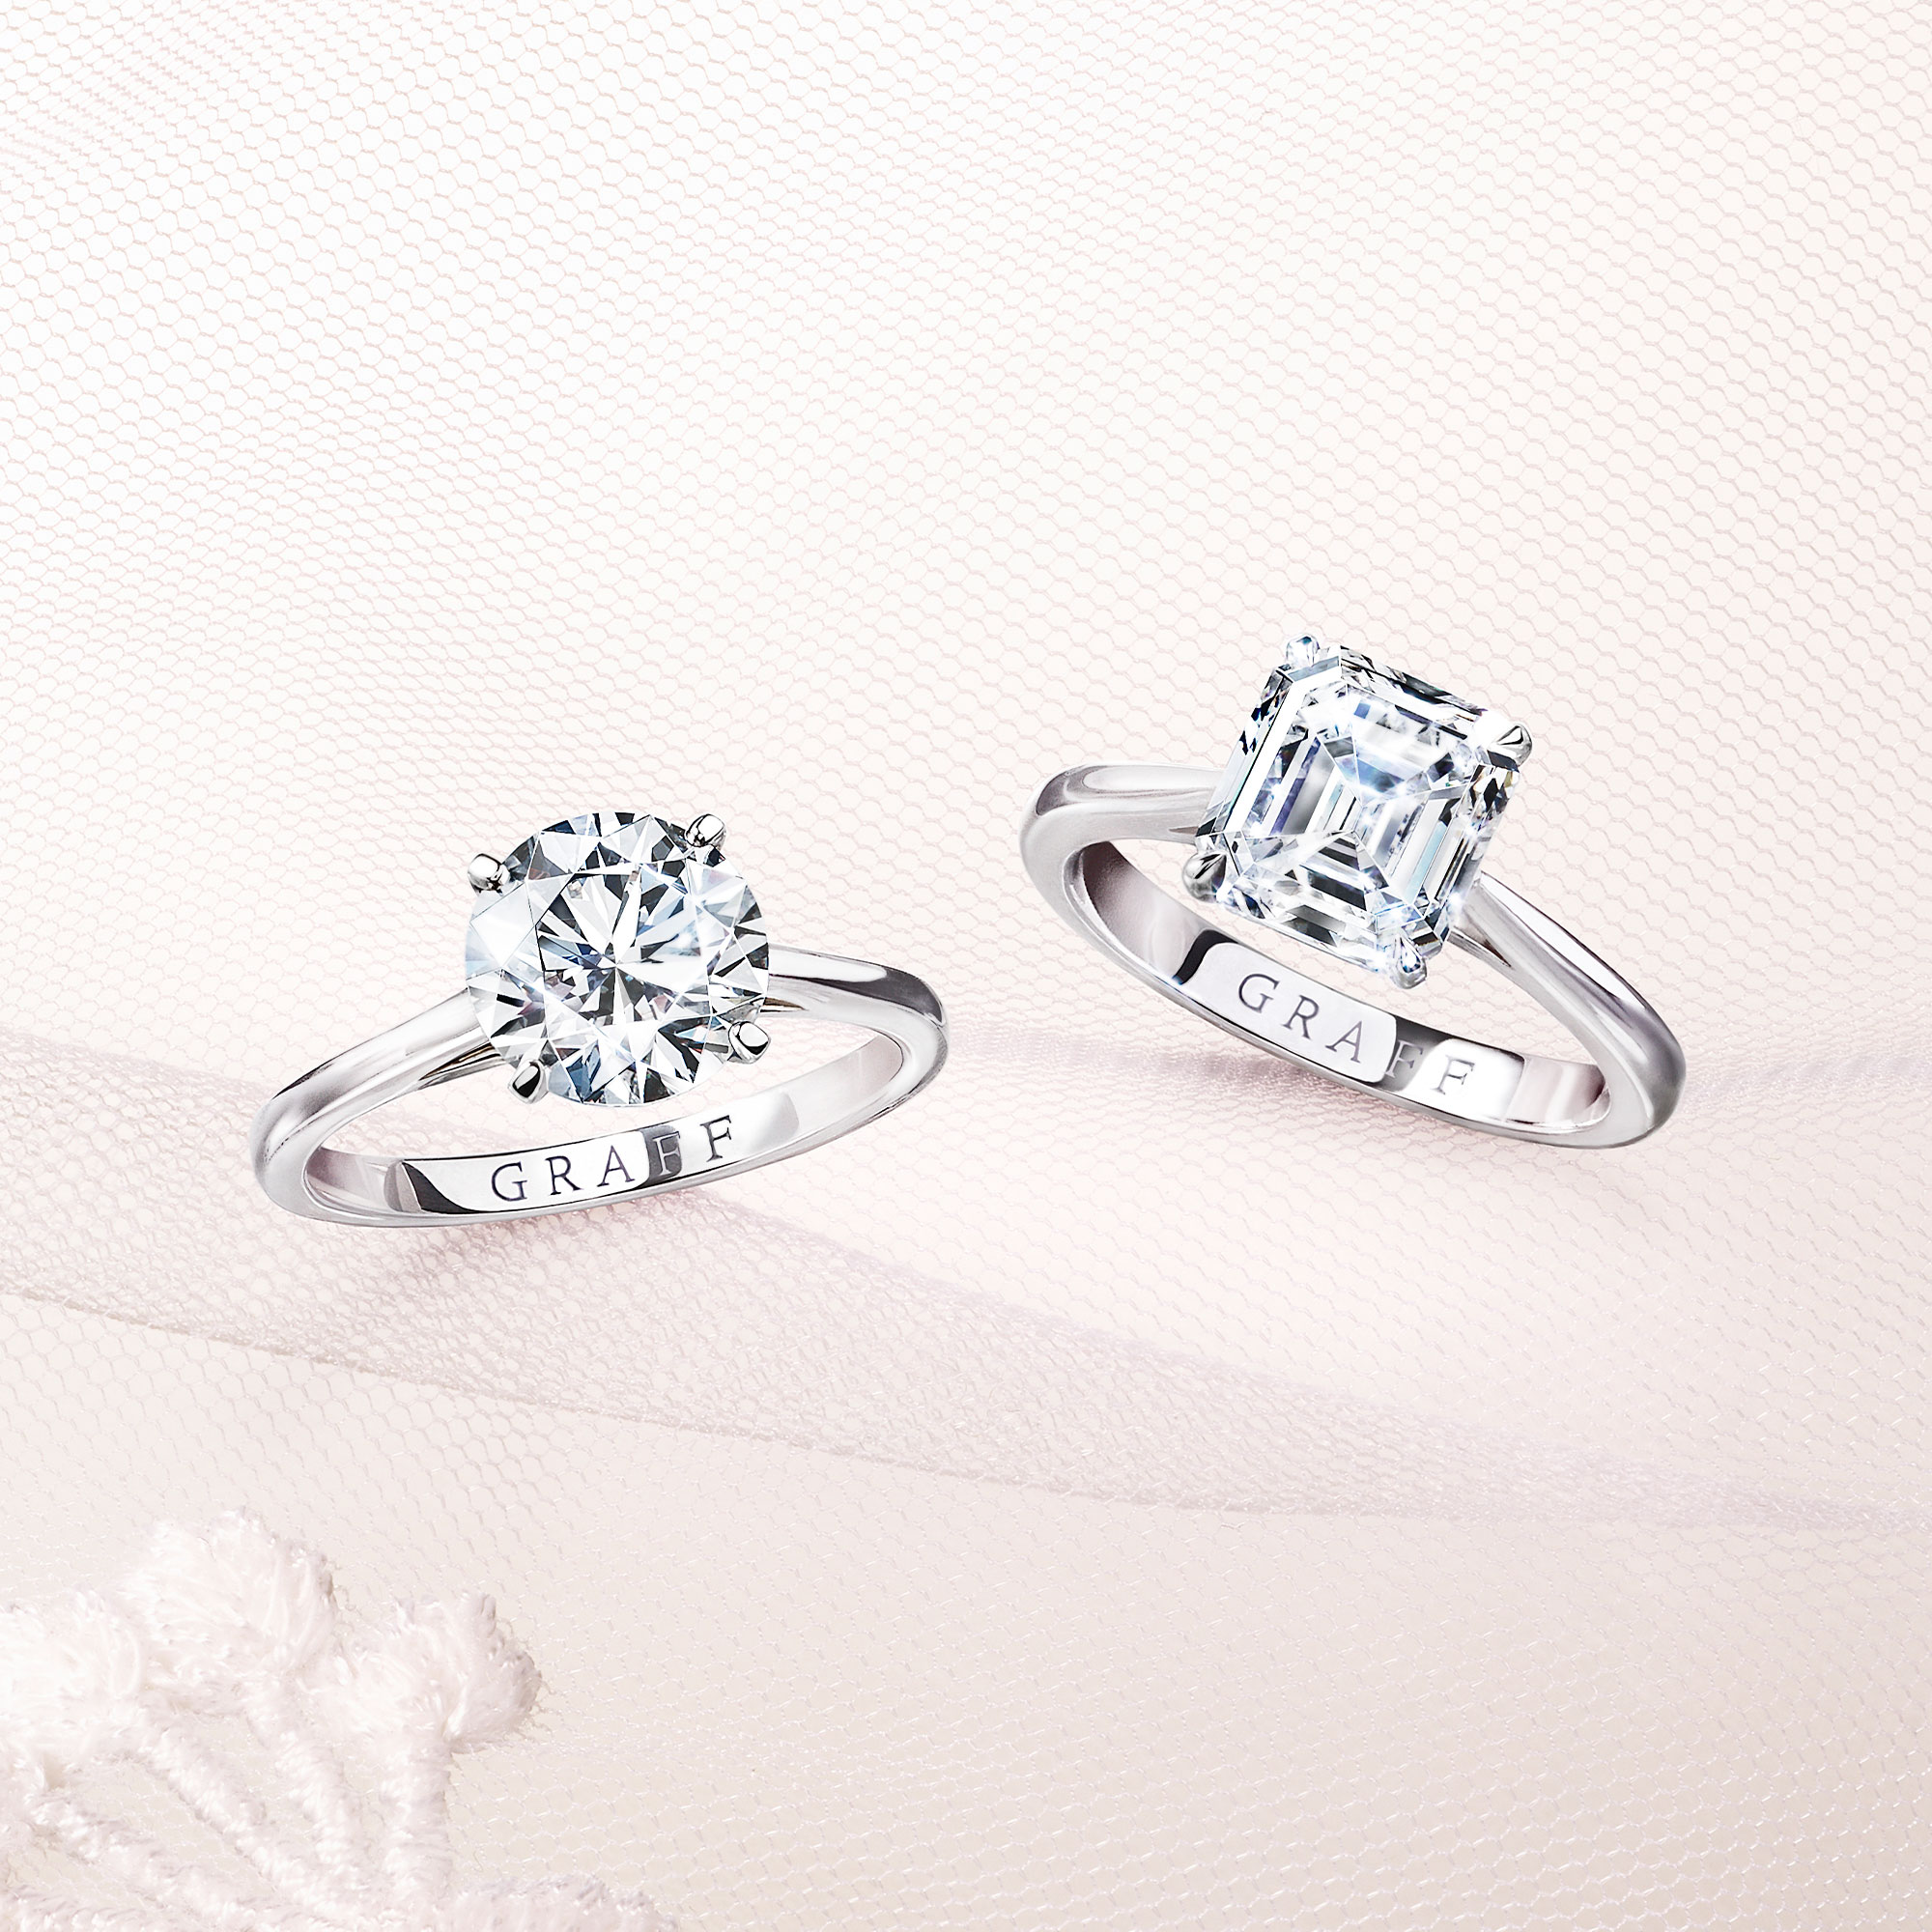 Paragon Emerald Cut Diamond Engagement Ring and  Paragon Round Diamond Engagement Ring.